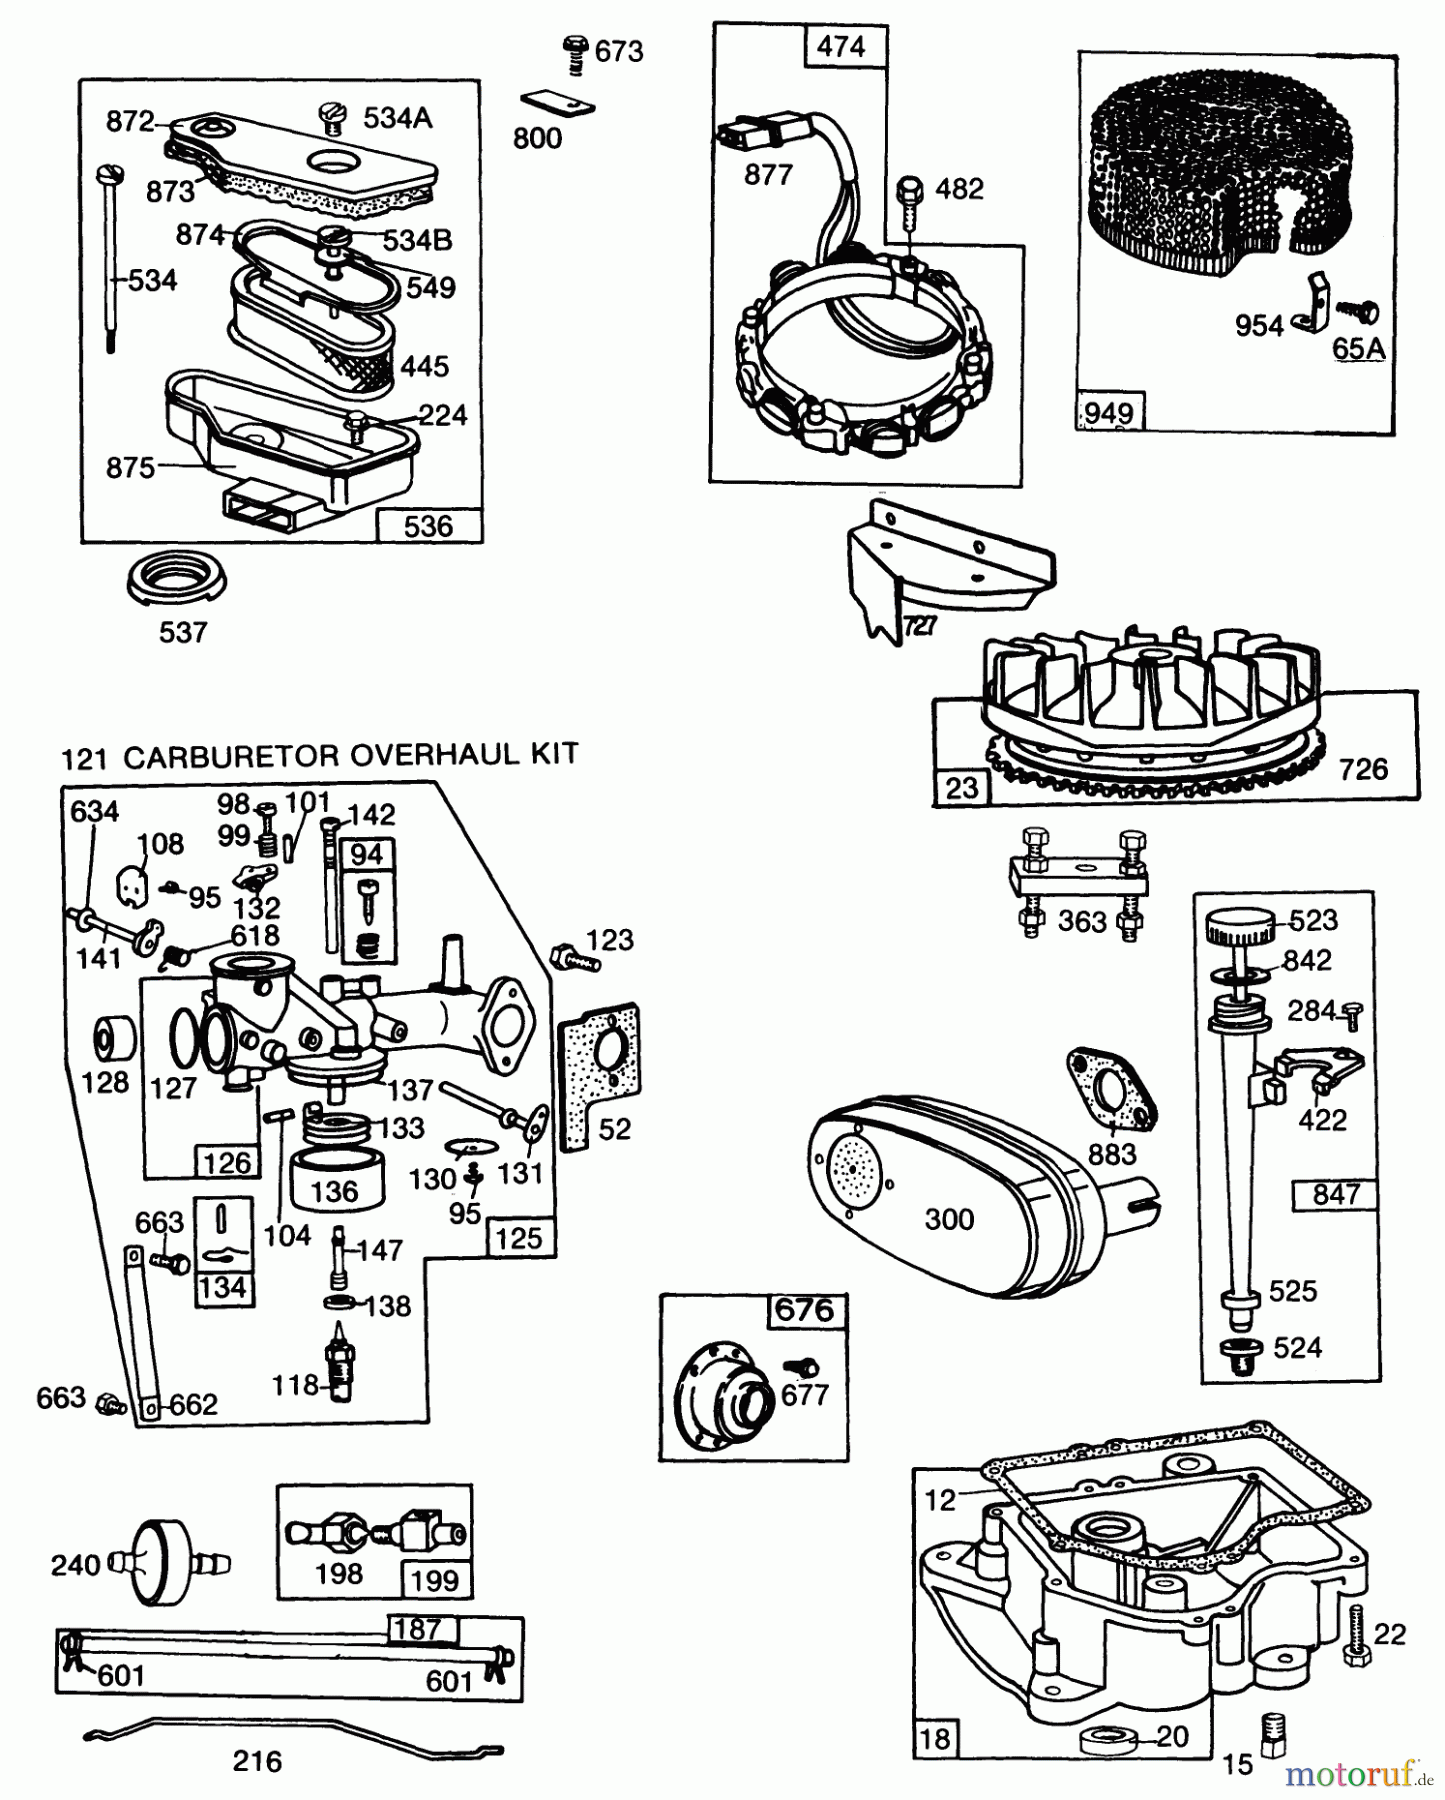  Toro Neu Mowers, Drive Unit Only 30111 - Toro Mid-Size Proline Gear Traction Unit, 11 hp, 1985 (5000001-5999999) BRIGGS & STRATTON MODEL NO. 253706-0180-01 #2